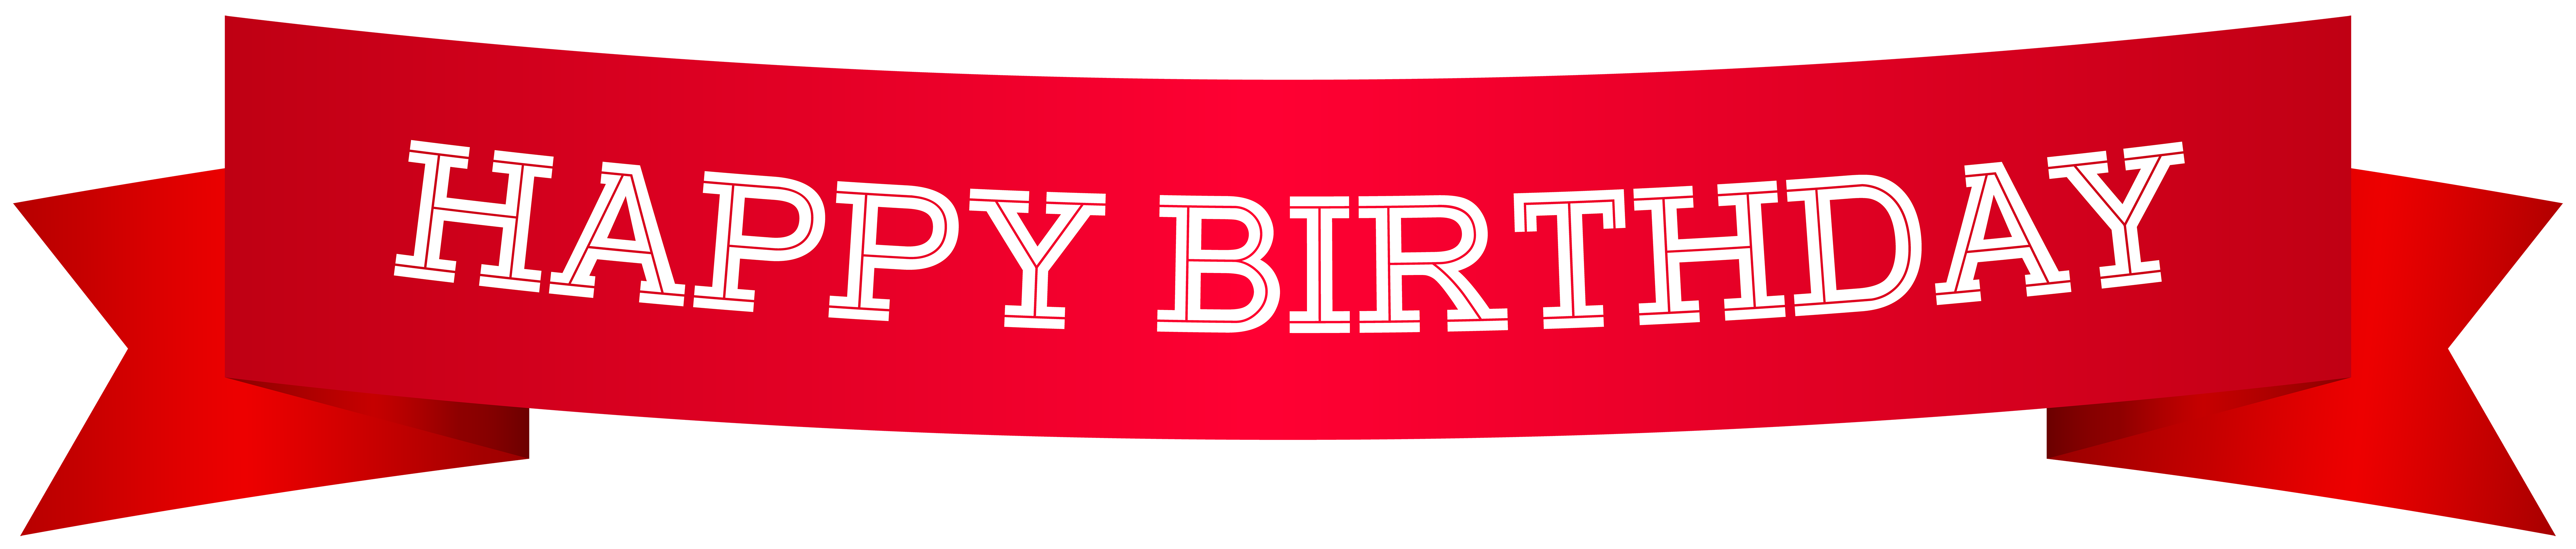 Banner Birthday Clip art - Happy Birthday Banner Red PNG Clip Art Image ...